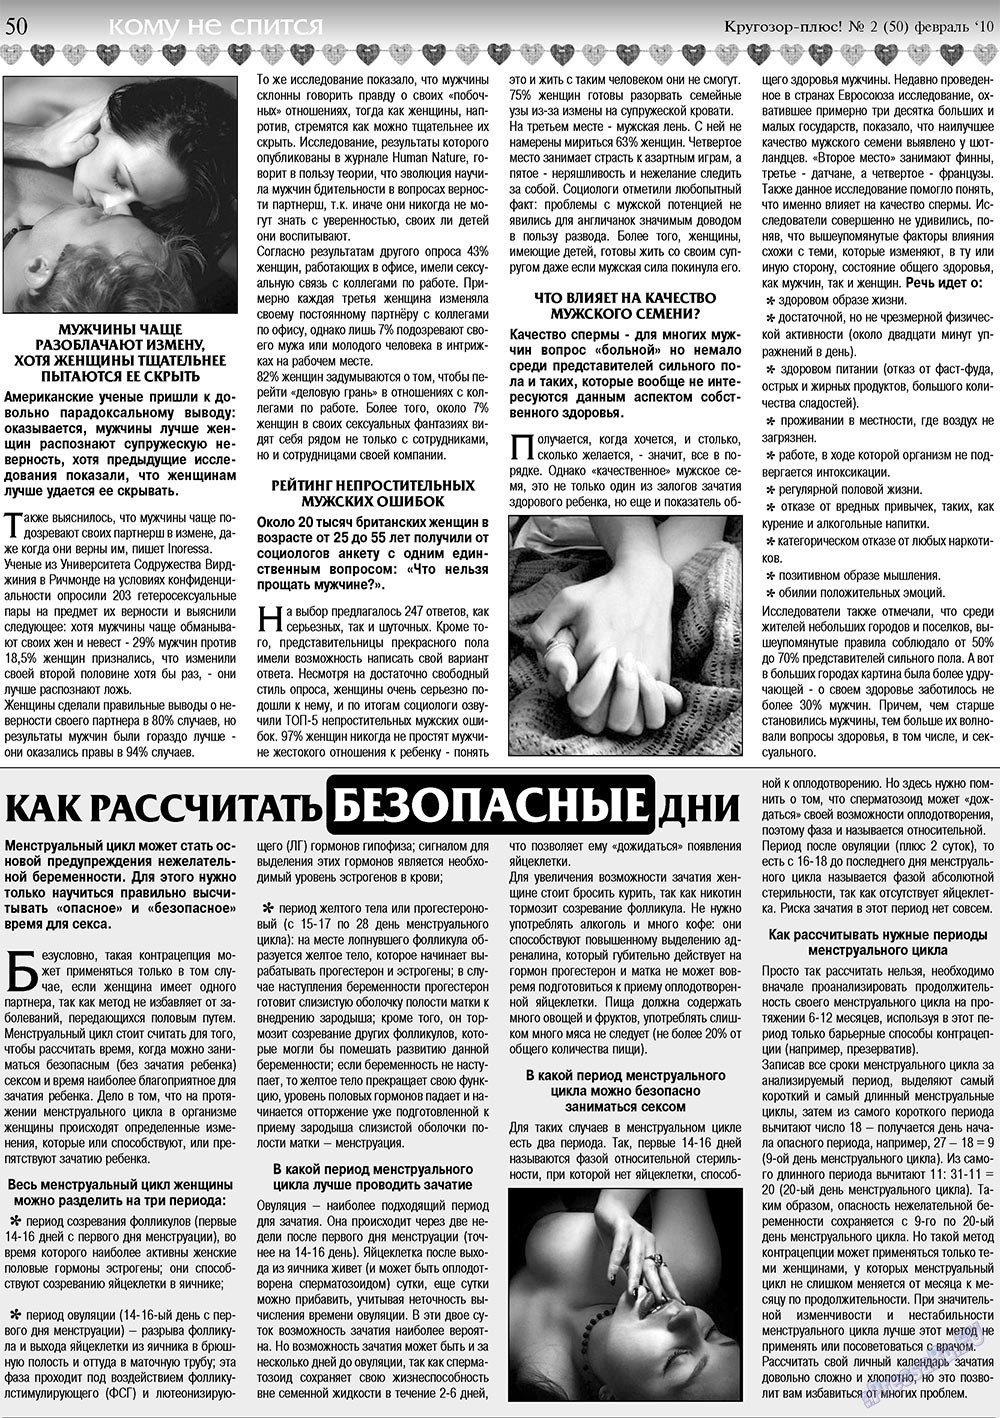 Кругозор плюс! (газета). 2010 год, номер 2, стр. 50